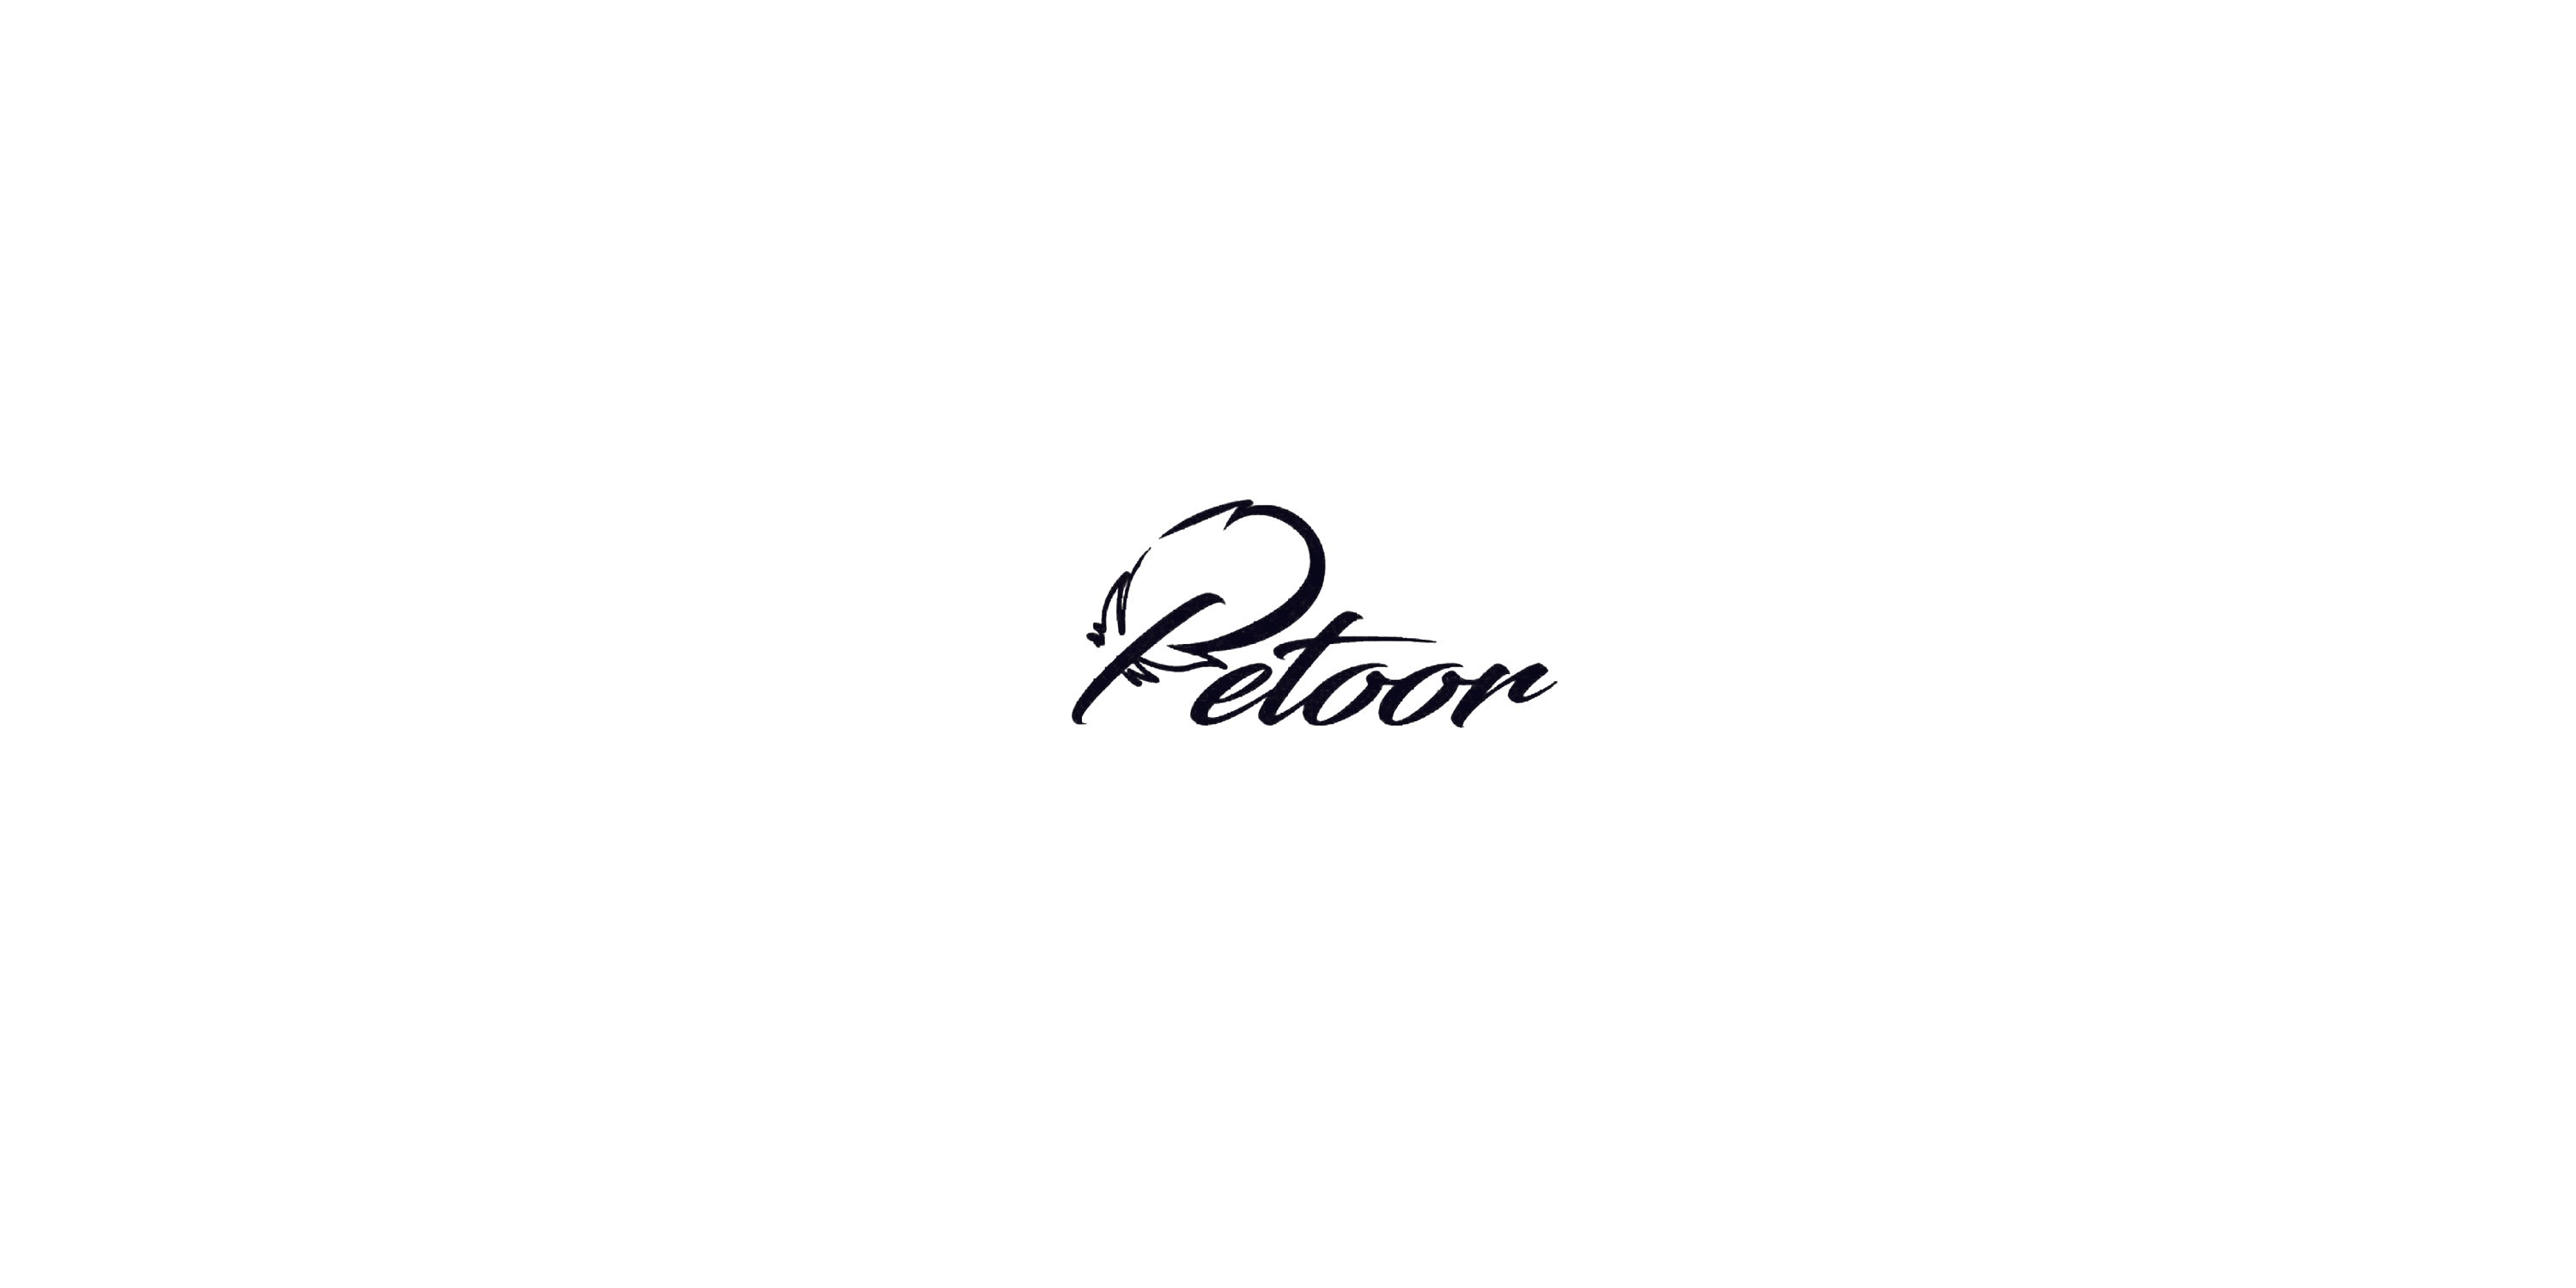 Petoor logo